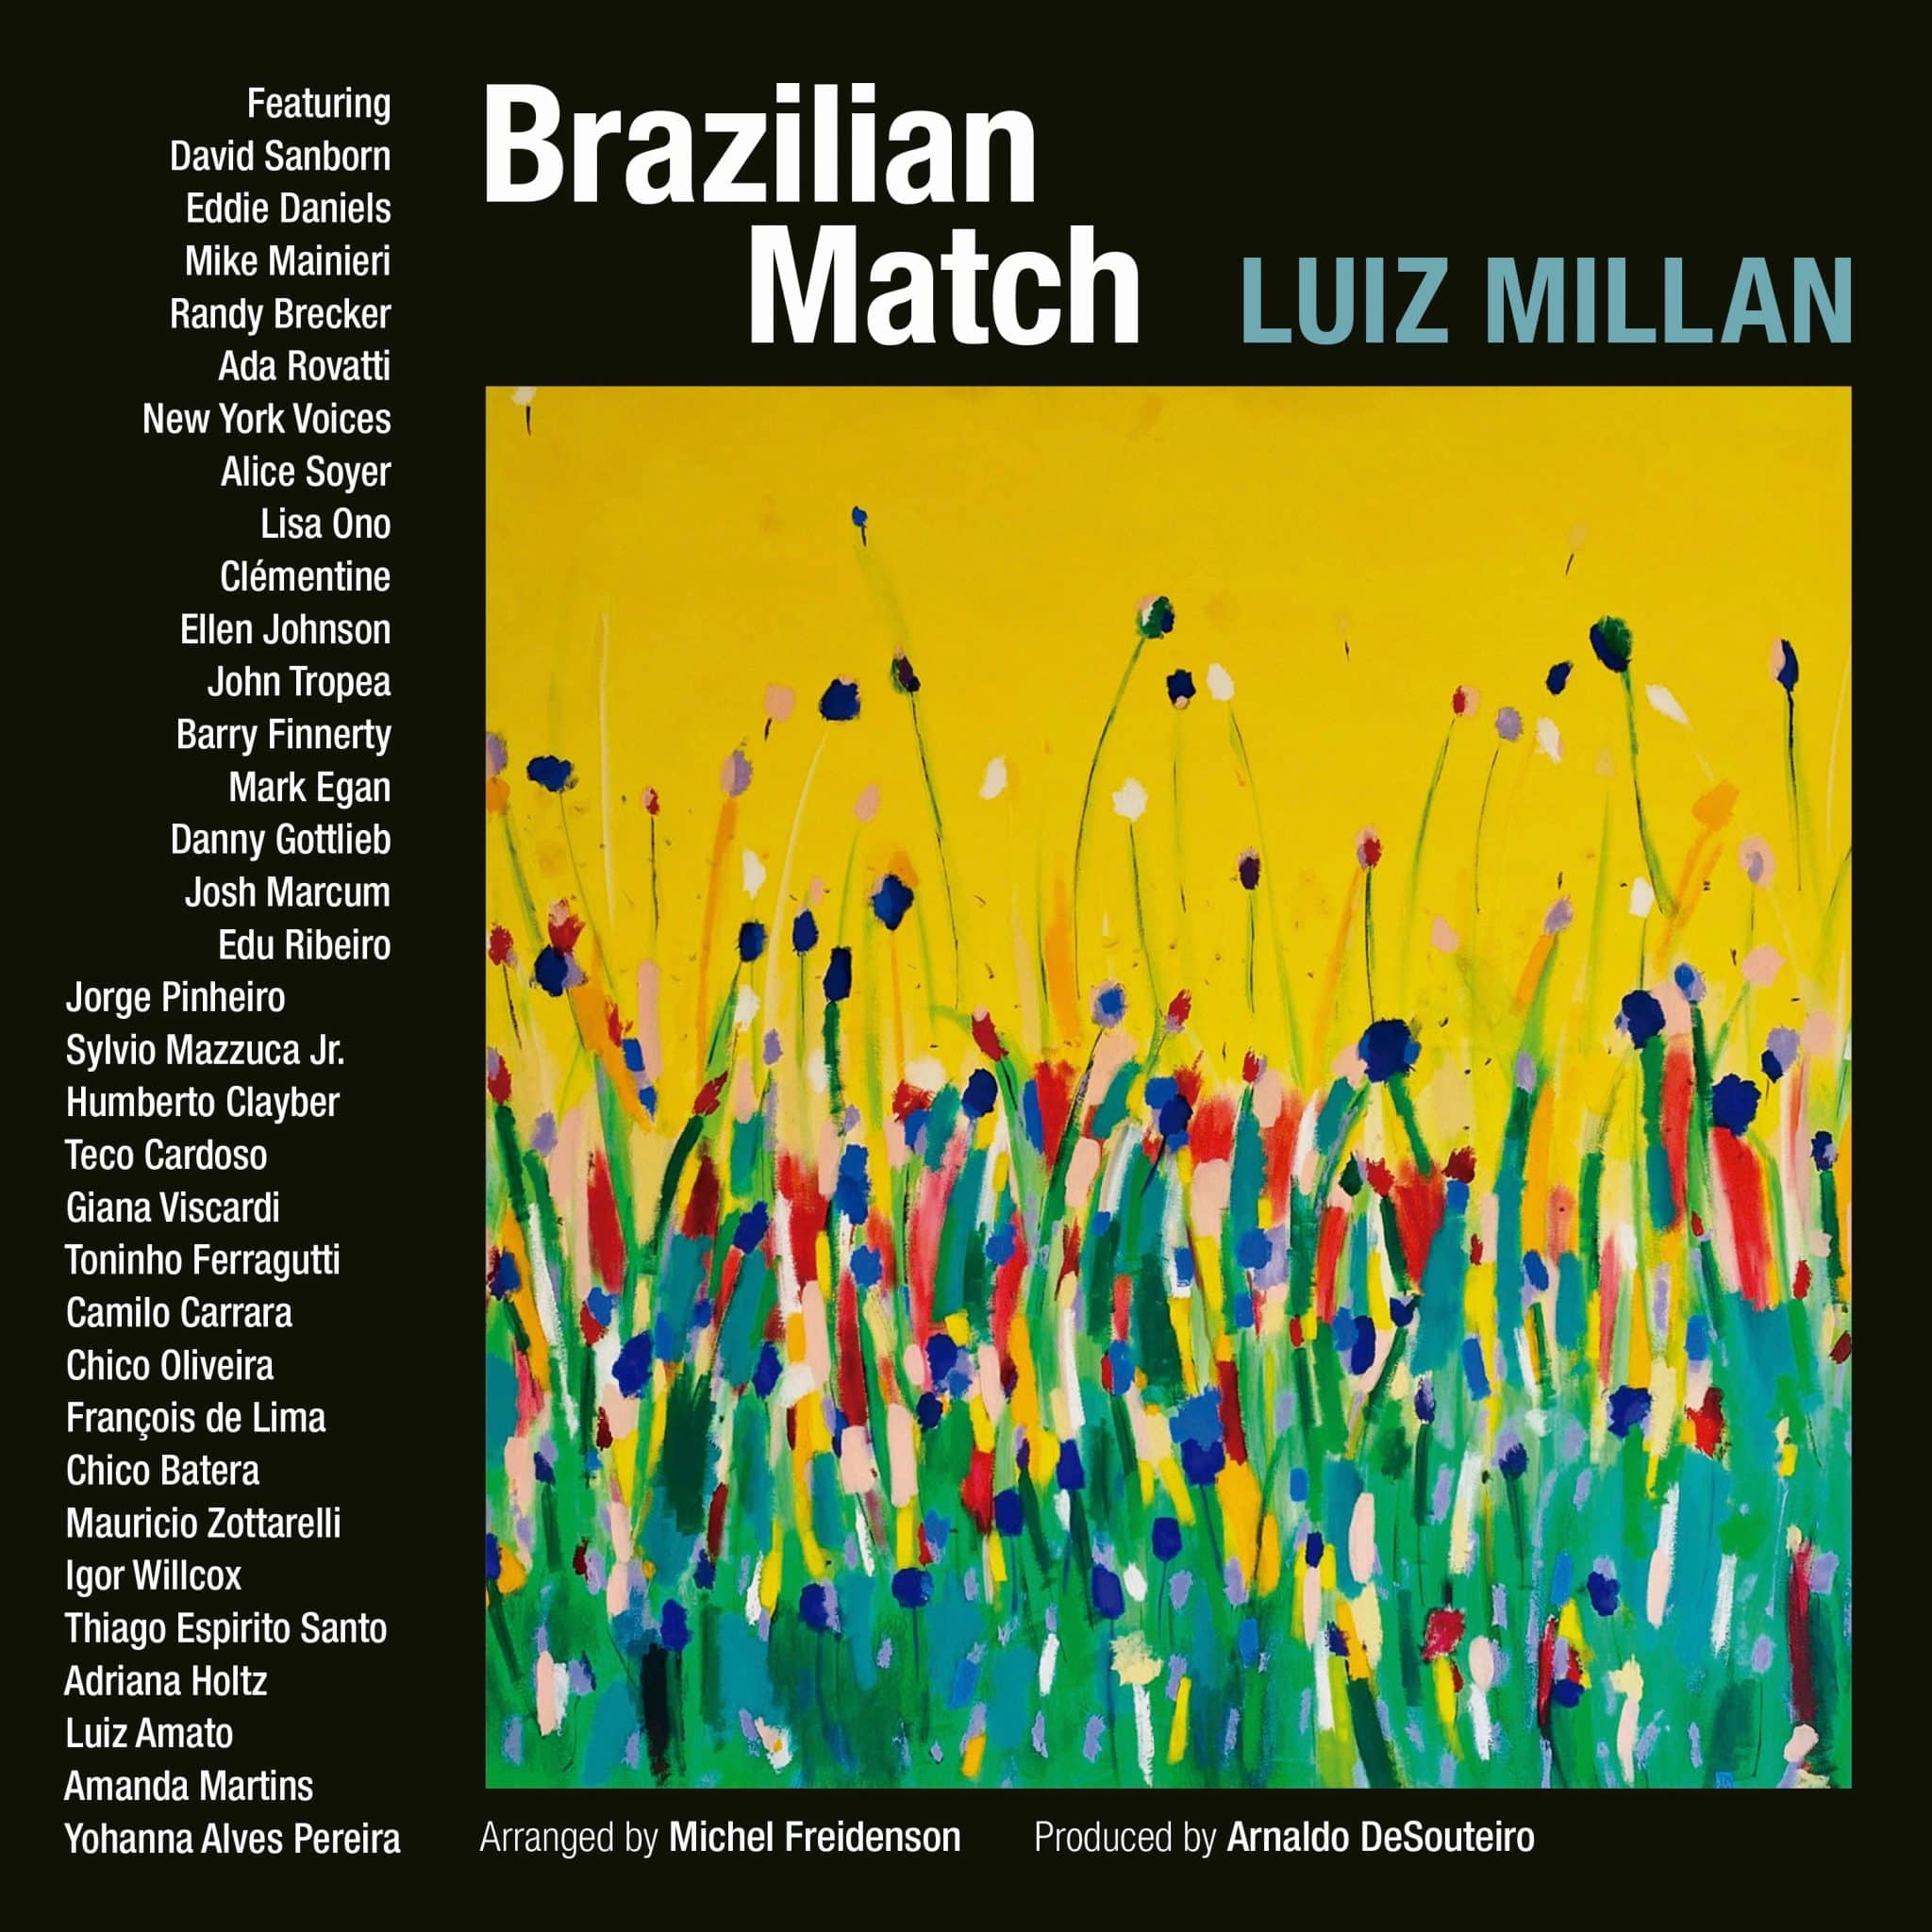 revistaprosaversoearte.com - 'Brazilian match', álbum do compositor e cantor Luiz Millan